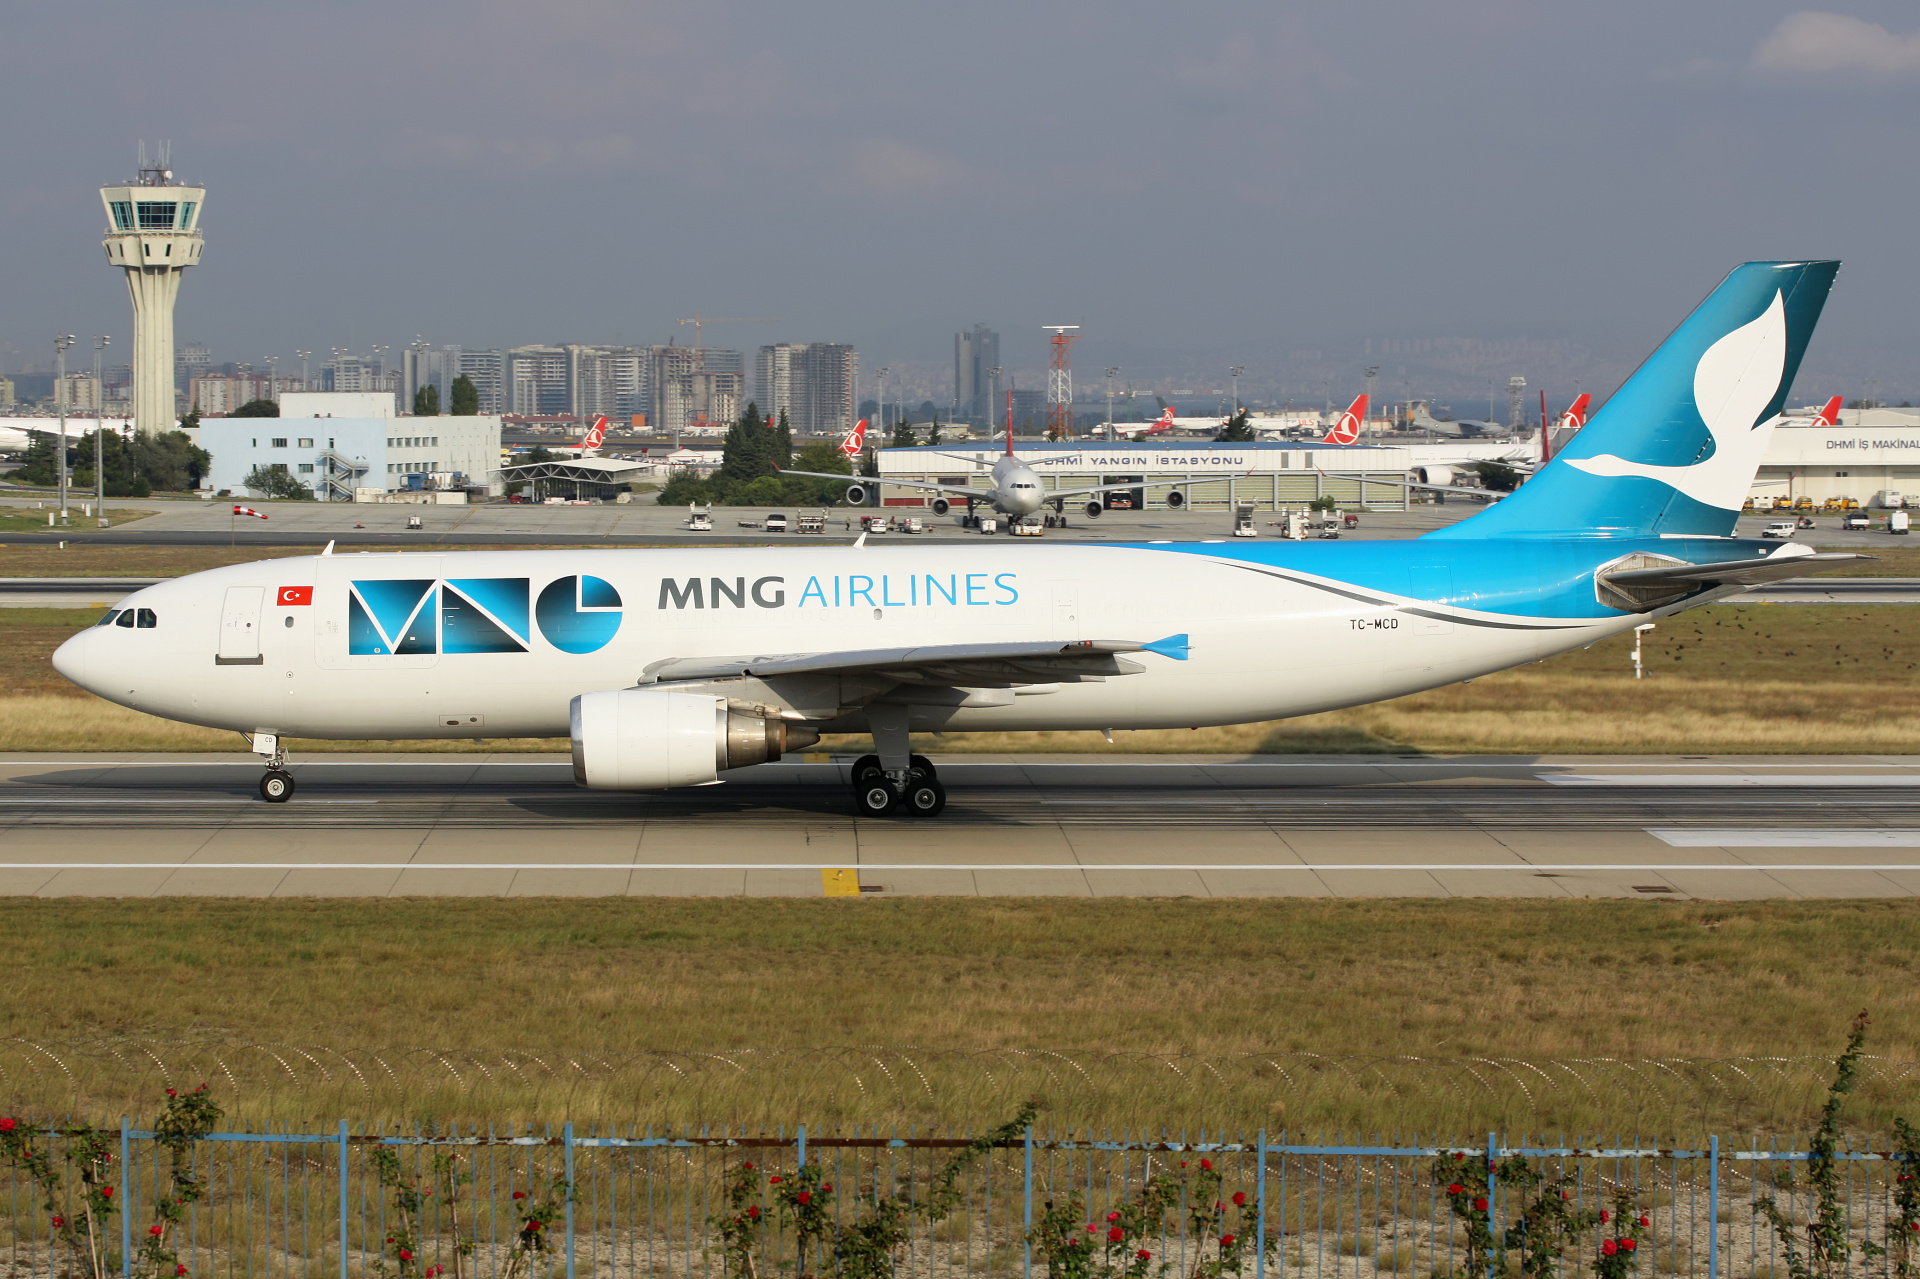 TC-MCD, MNG Airlines Cargo (Samoloty » Port Lotniczy im. Atatürka w Stambule » Airbus A300B4-600F)